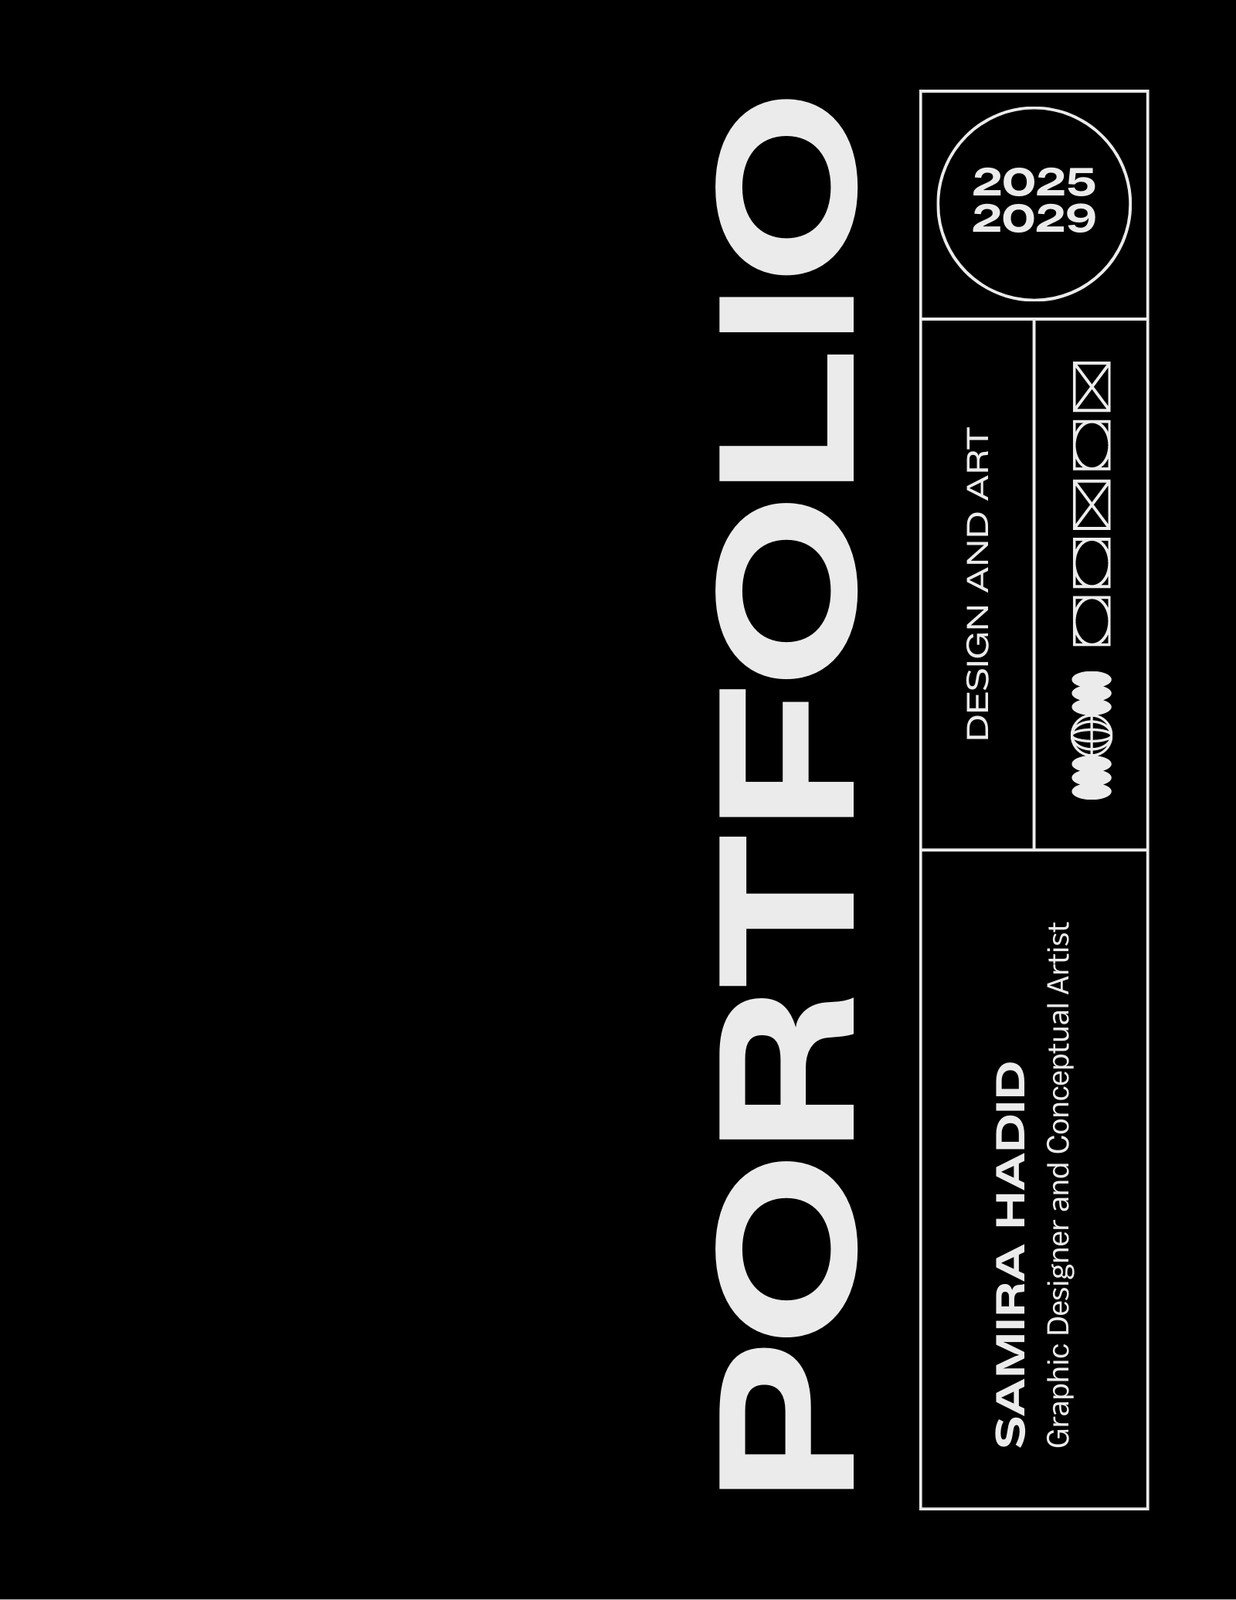 graphic designer portfolio cover page